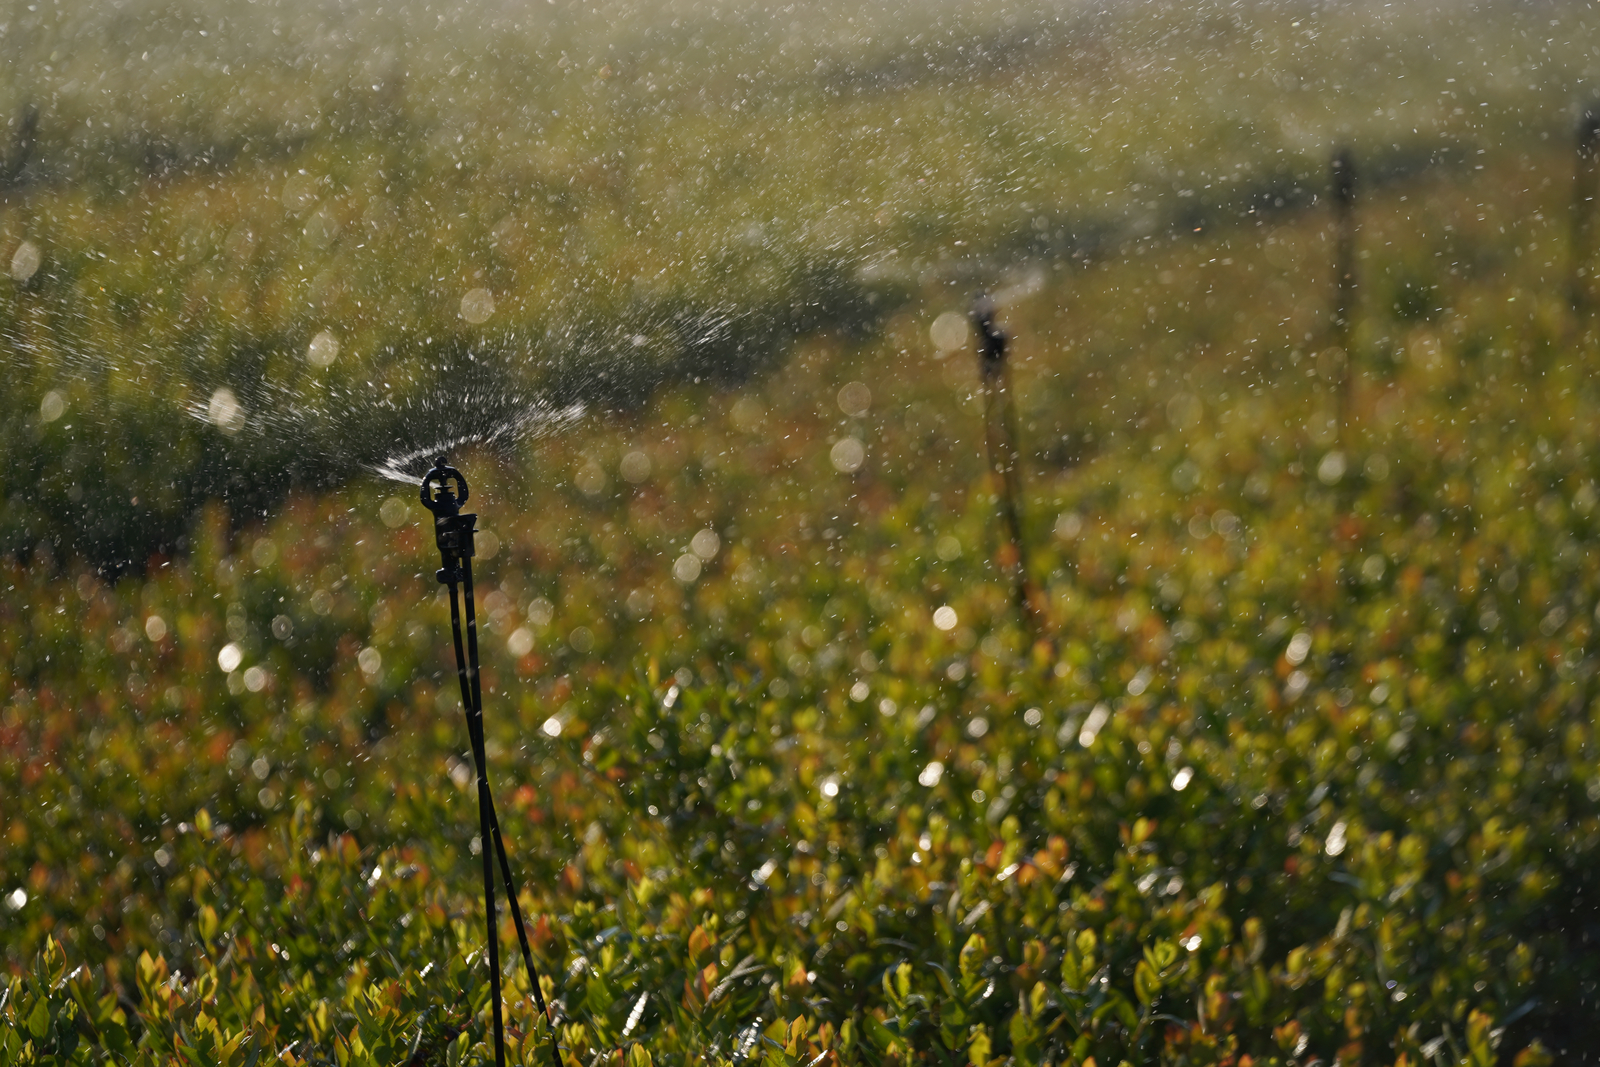 Sprinklers irrigation